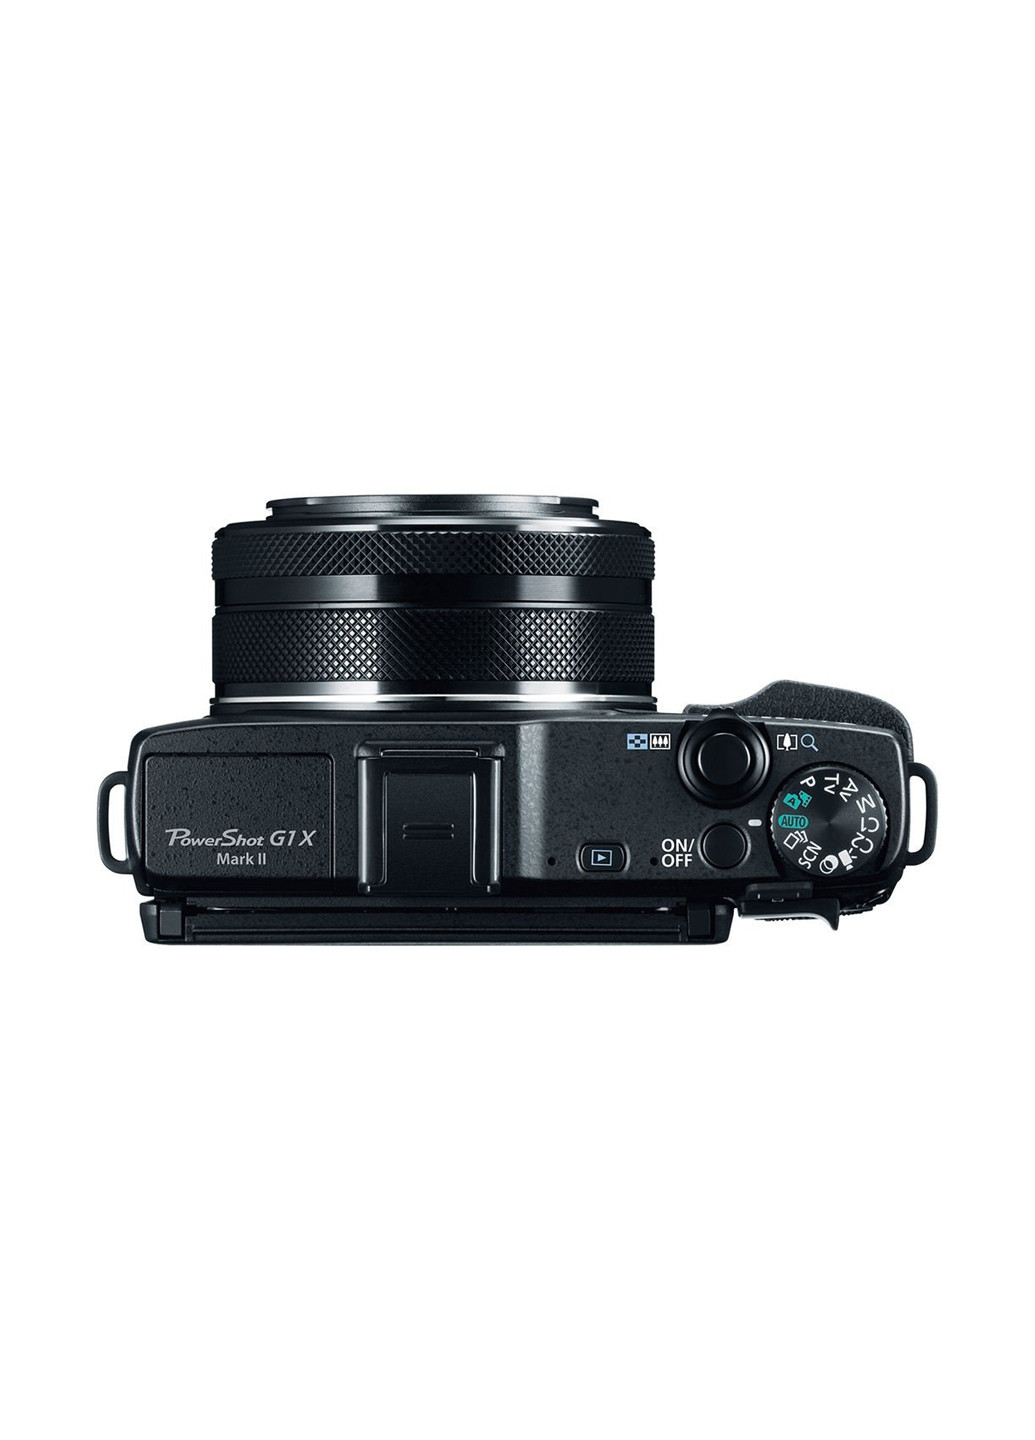 Компактная фотокамера Canon powershot g1 x mark ii з wi-fi (130567458)